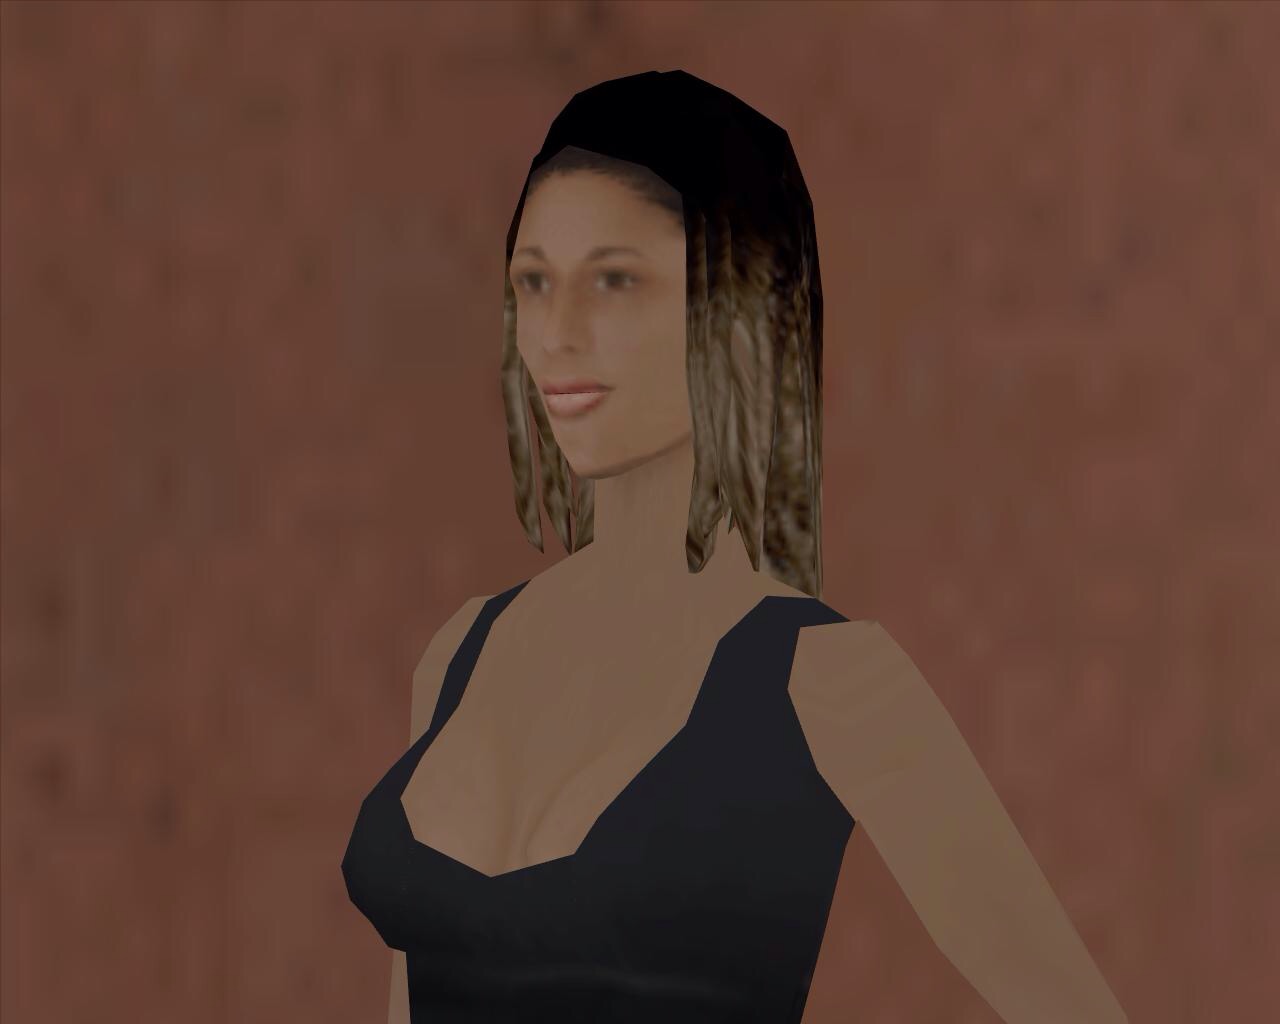 Девушки в GTA San Andreas | Grand Theft Wiki | Fandom